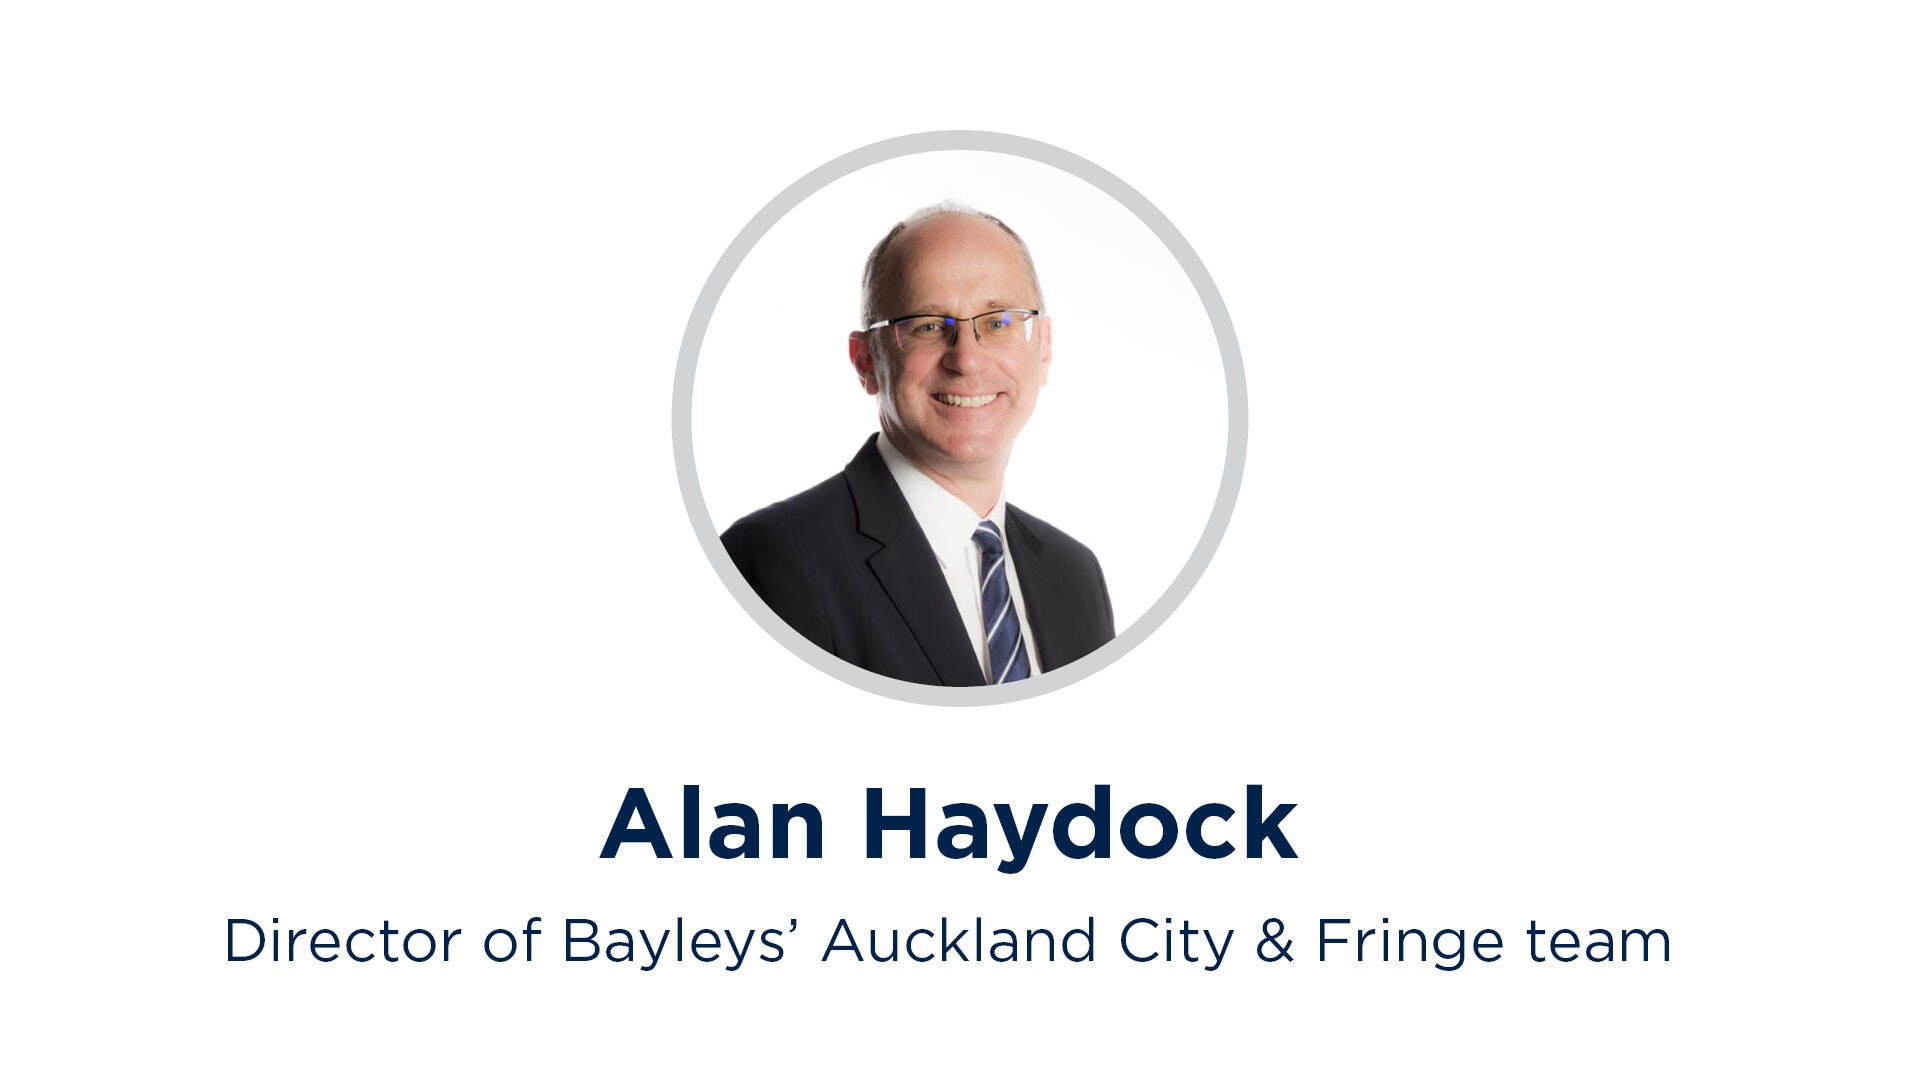 Alan Haydock